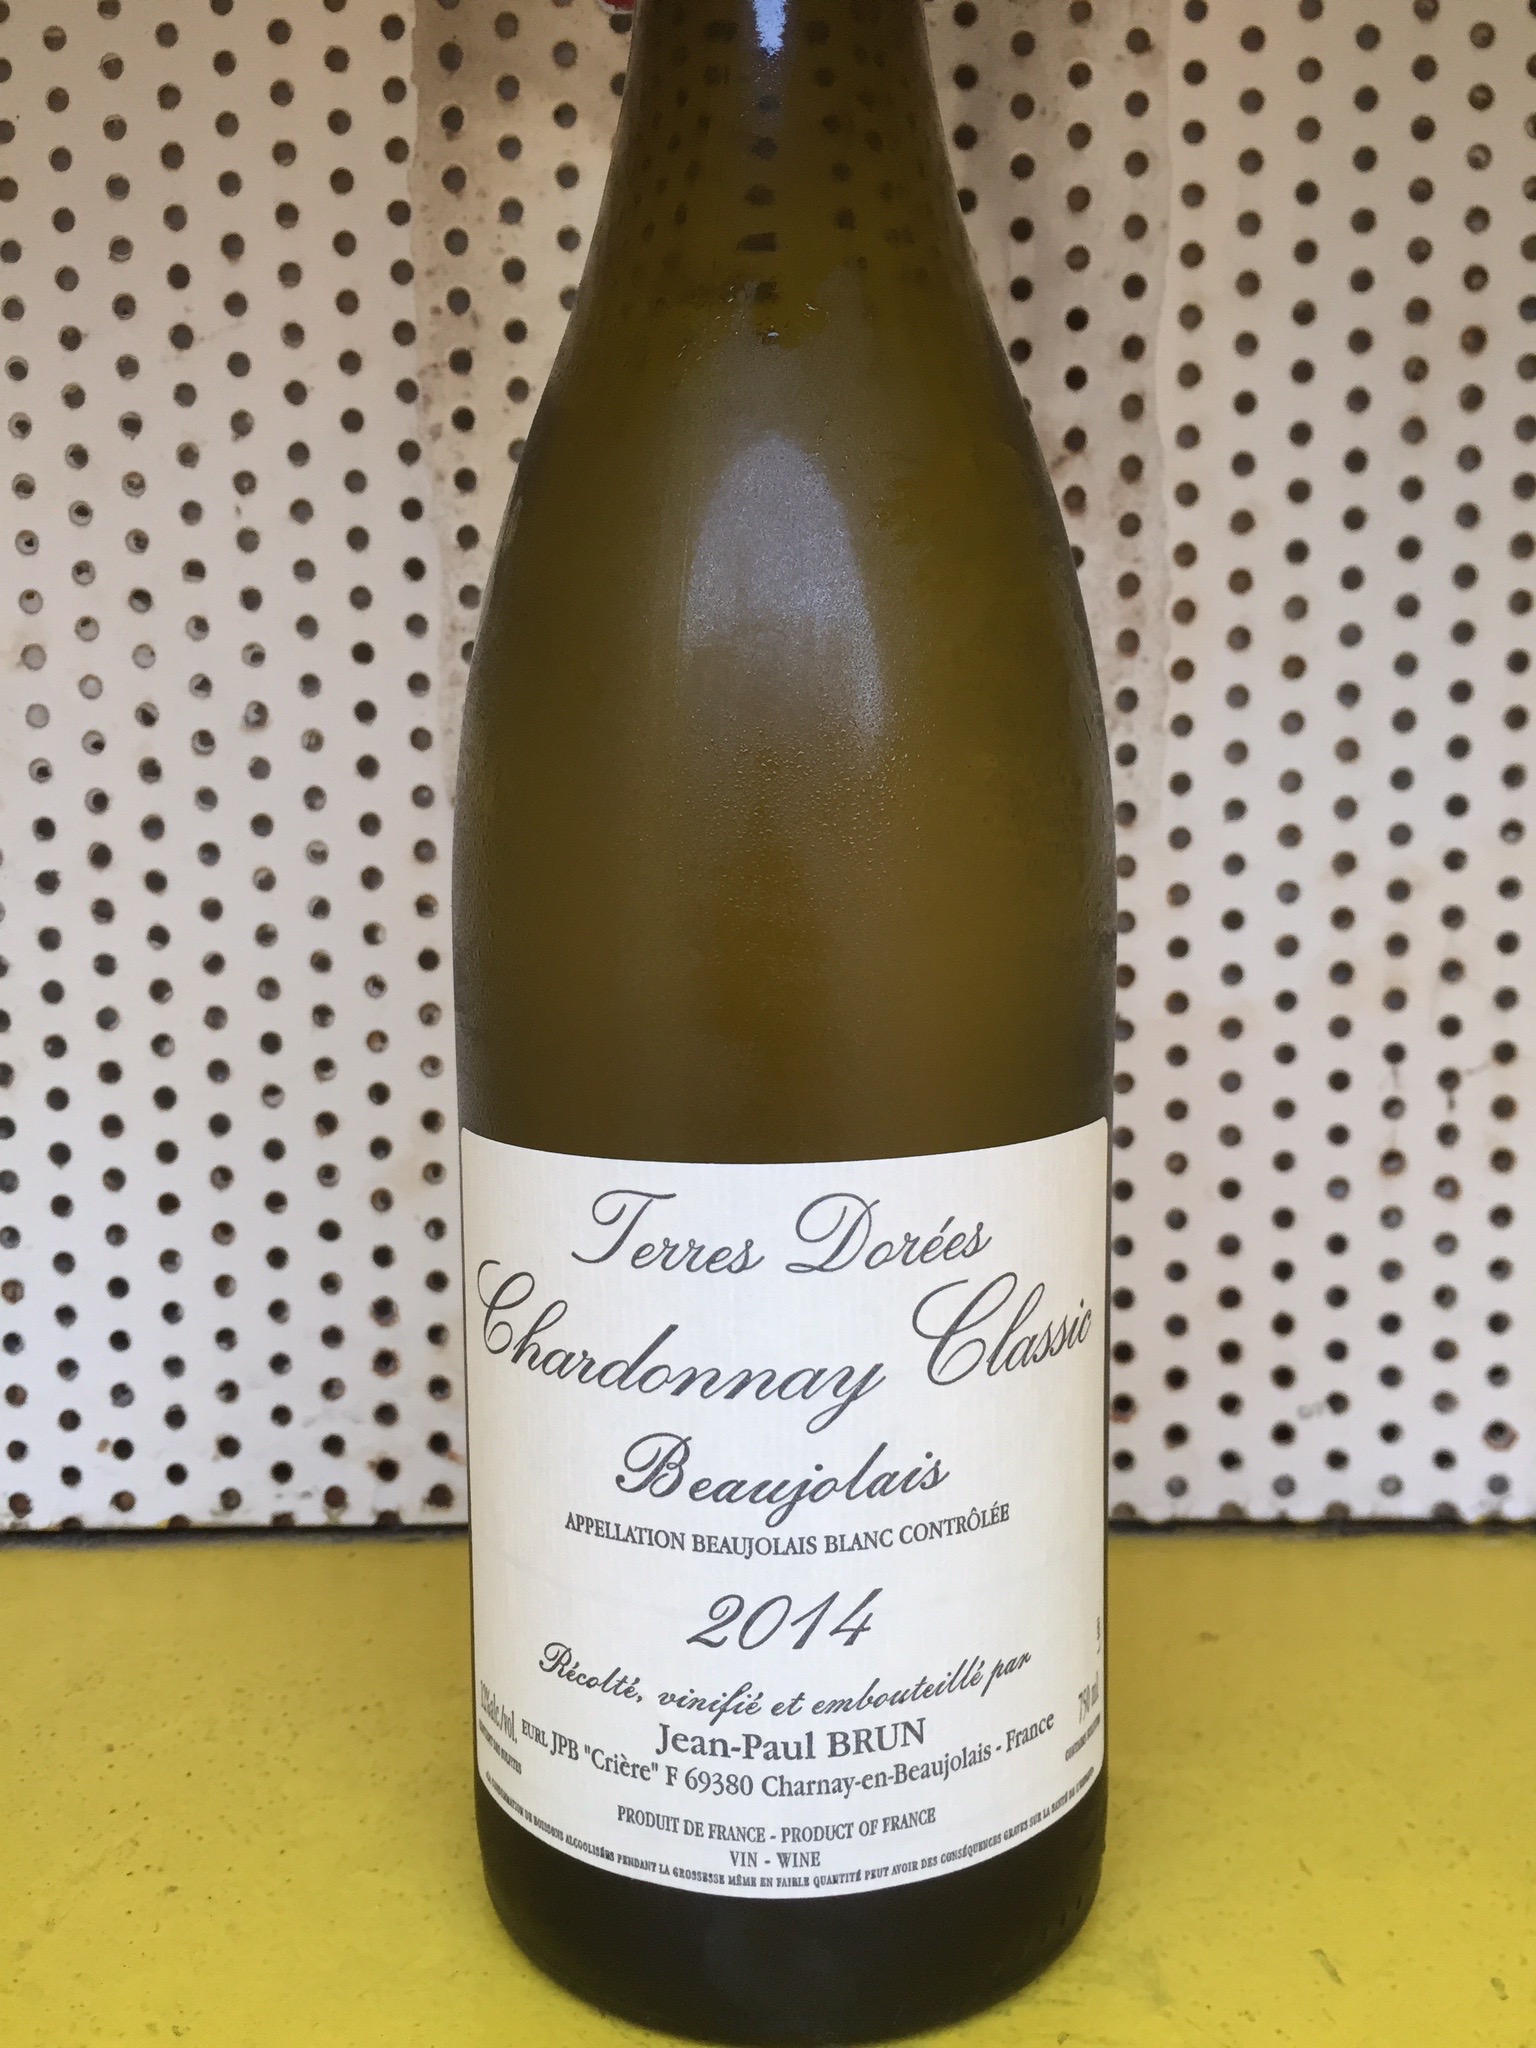 Beaujolais/Terres Dorées/ Brun/ Chardonnay Classic